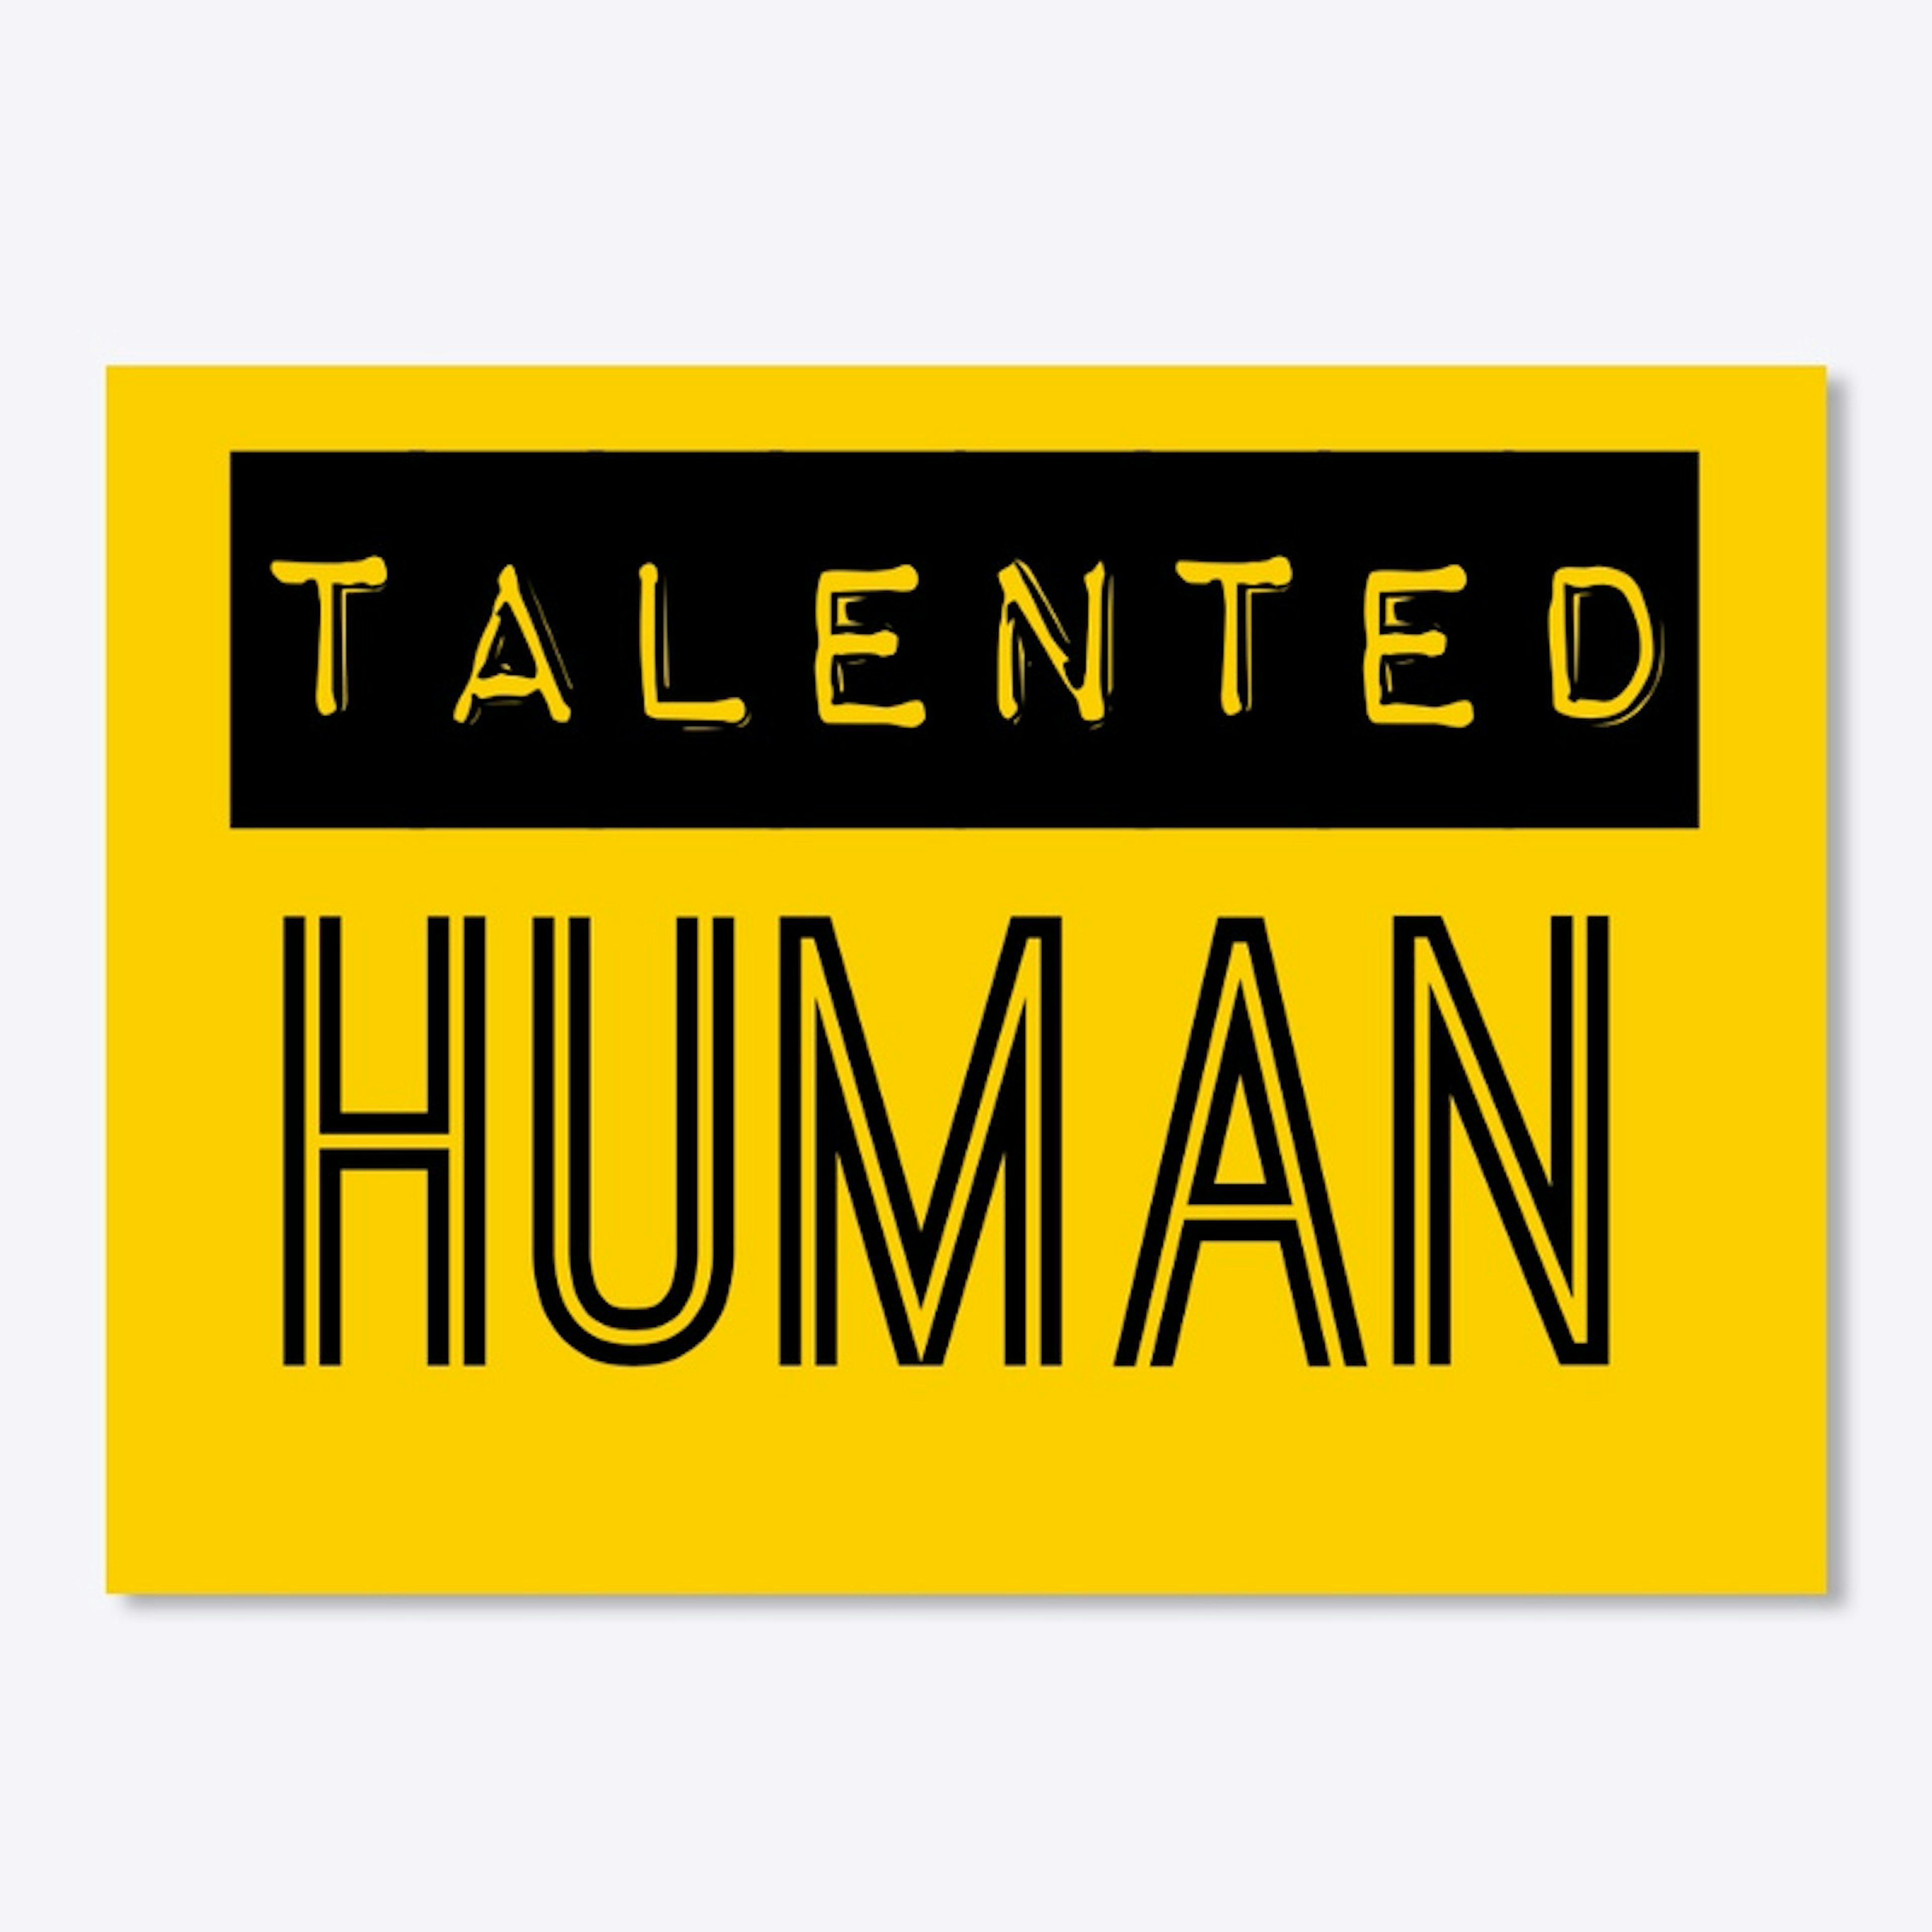 Talented Human